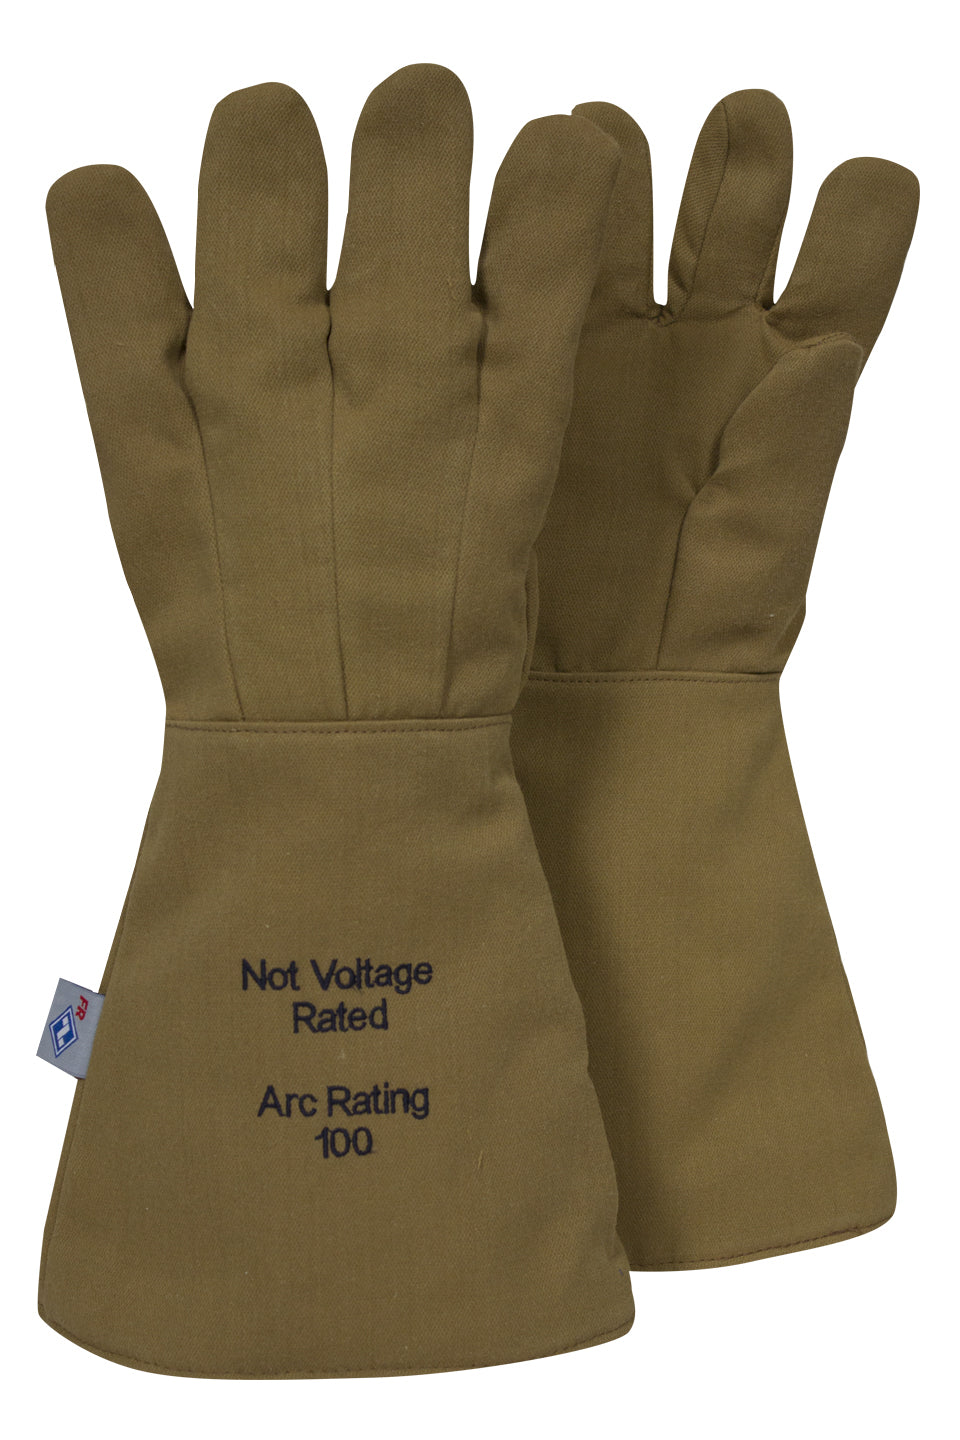 100 Cal ArcGuard Nomex/Kevlar Gloves